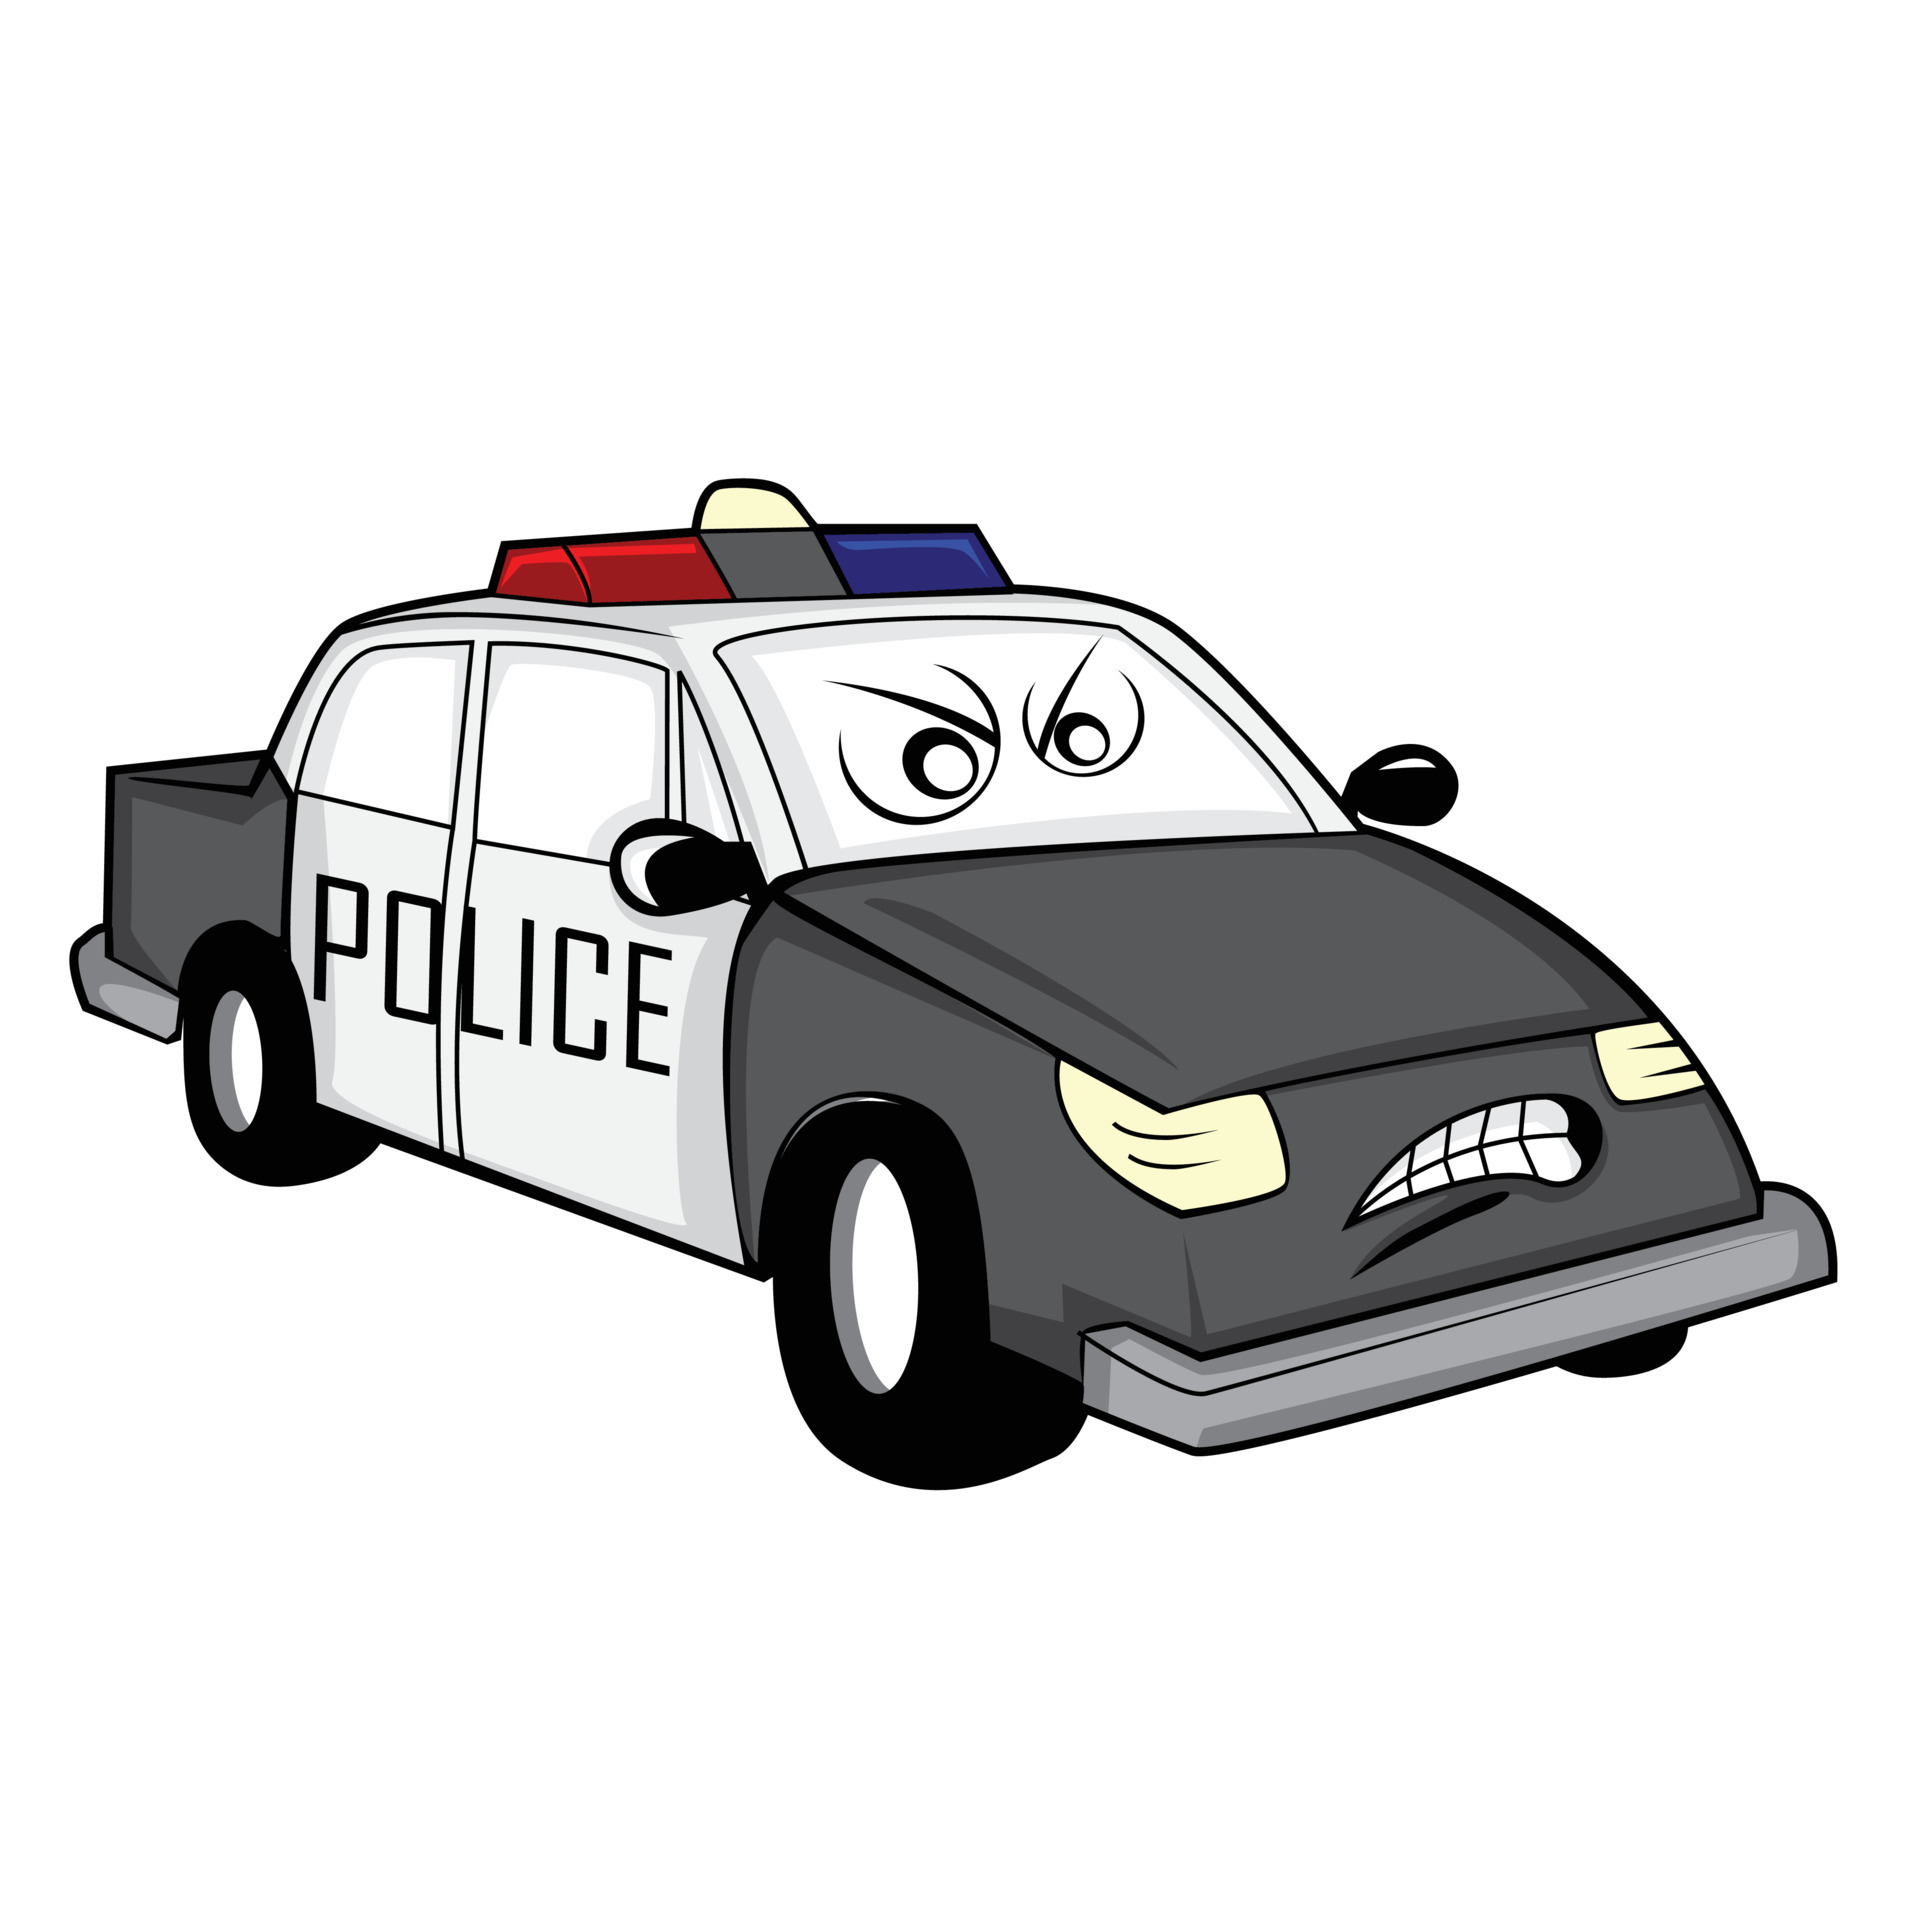 Police Car Cartoon Illustration 14486542 Vector Art at Vecteezy